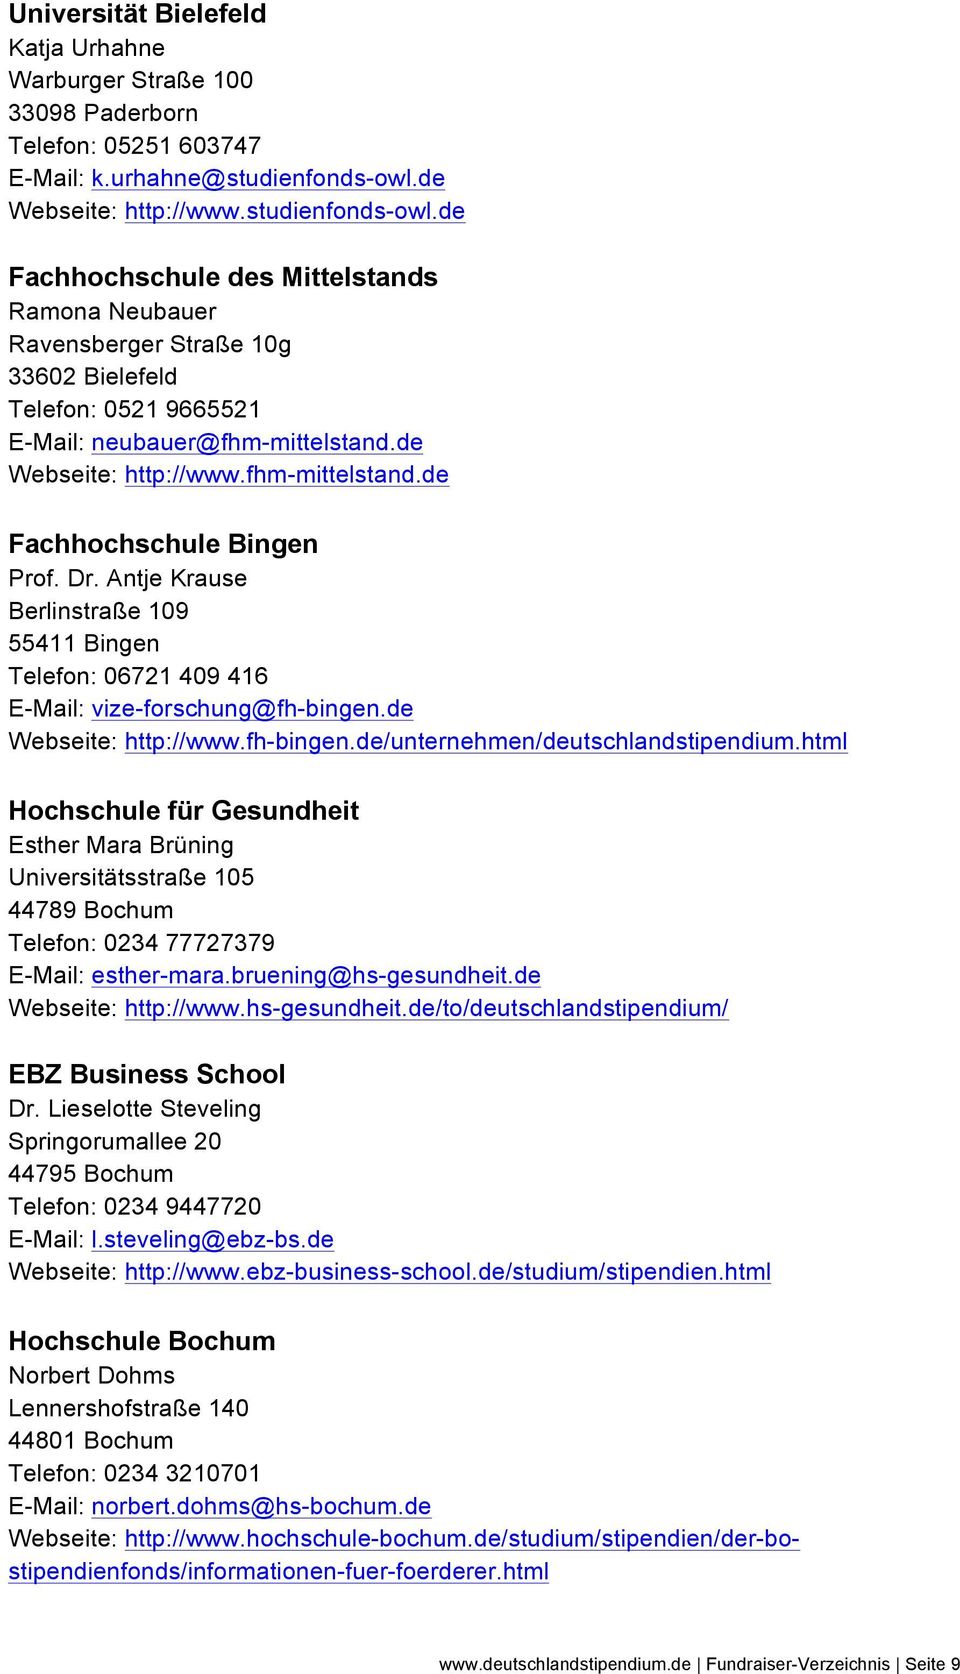 de Webseite: http://www.fhm-mittelstand.de Fachhochschule Bingen Prof. Dr. Antje Krause Berlinstraße 109 55411 Bingen Telefon: 06721 409 416 E-Mail: vize-forschung@fh-bingen.